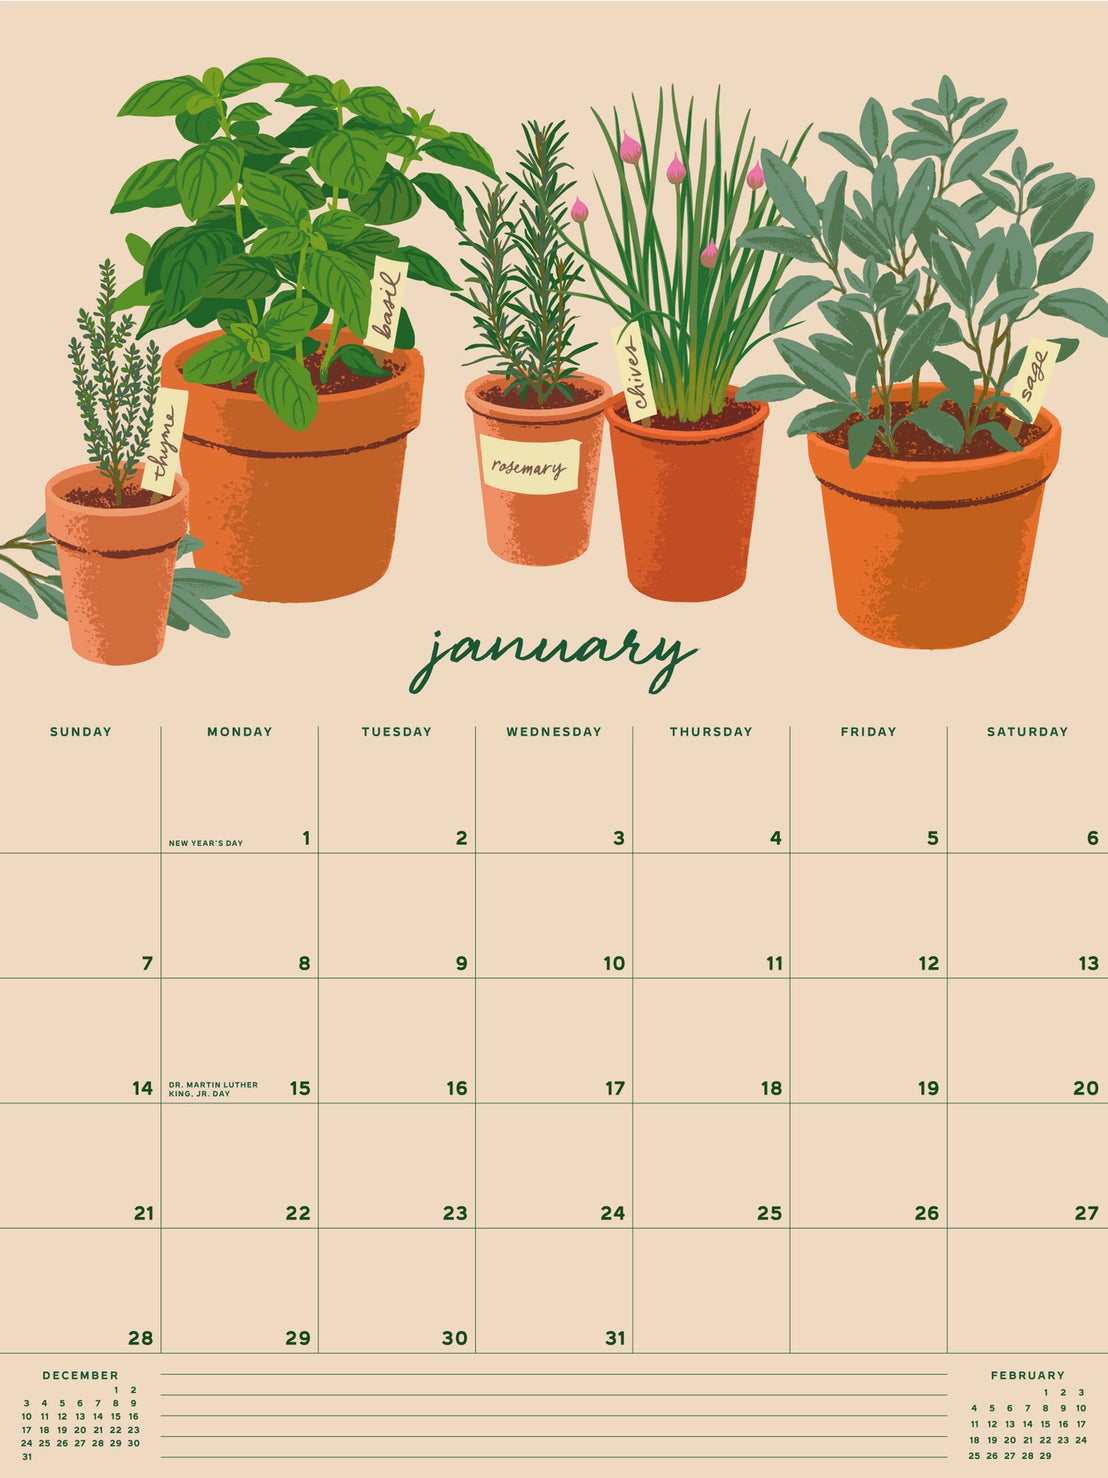 2024 Fresh From The Garden Calendar